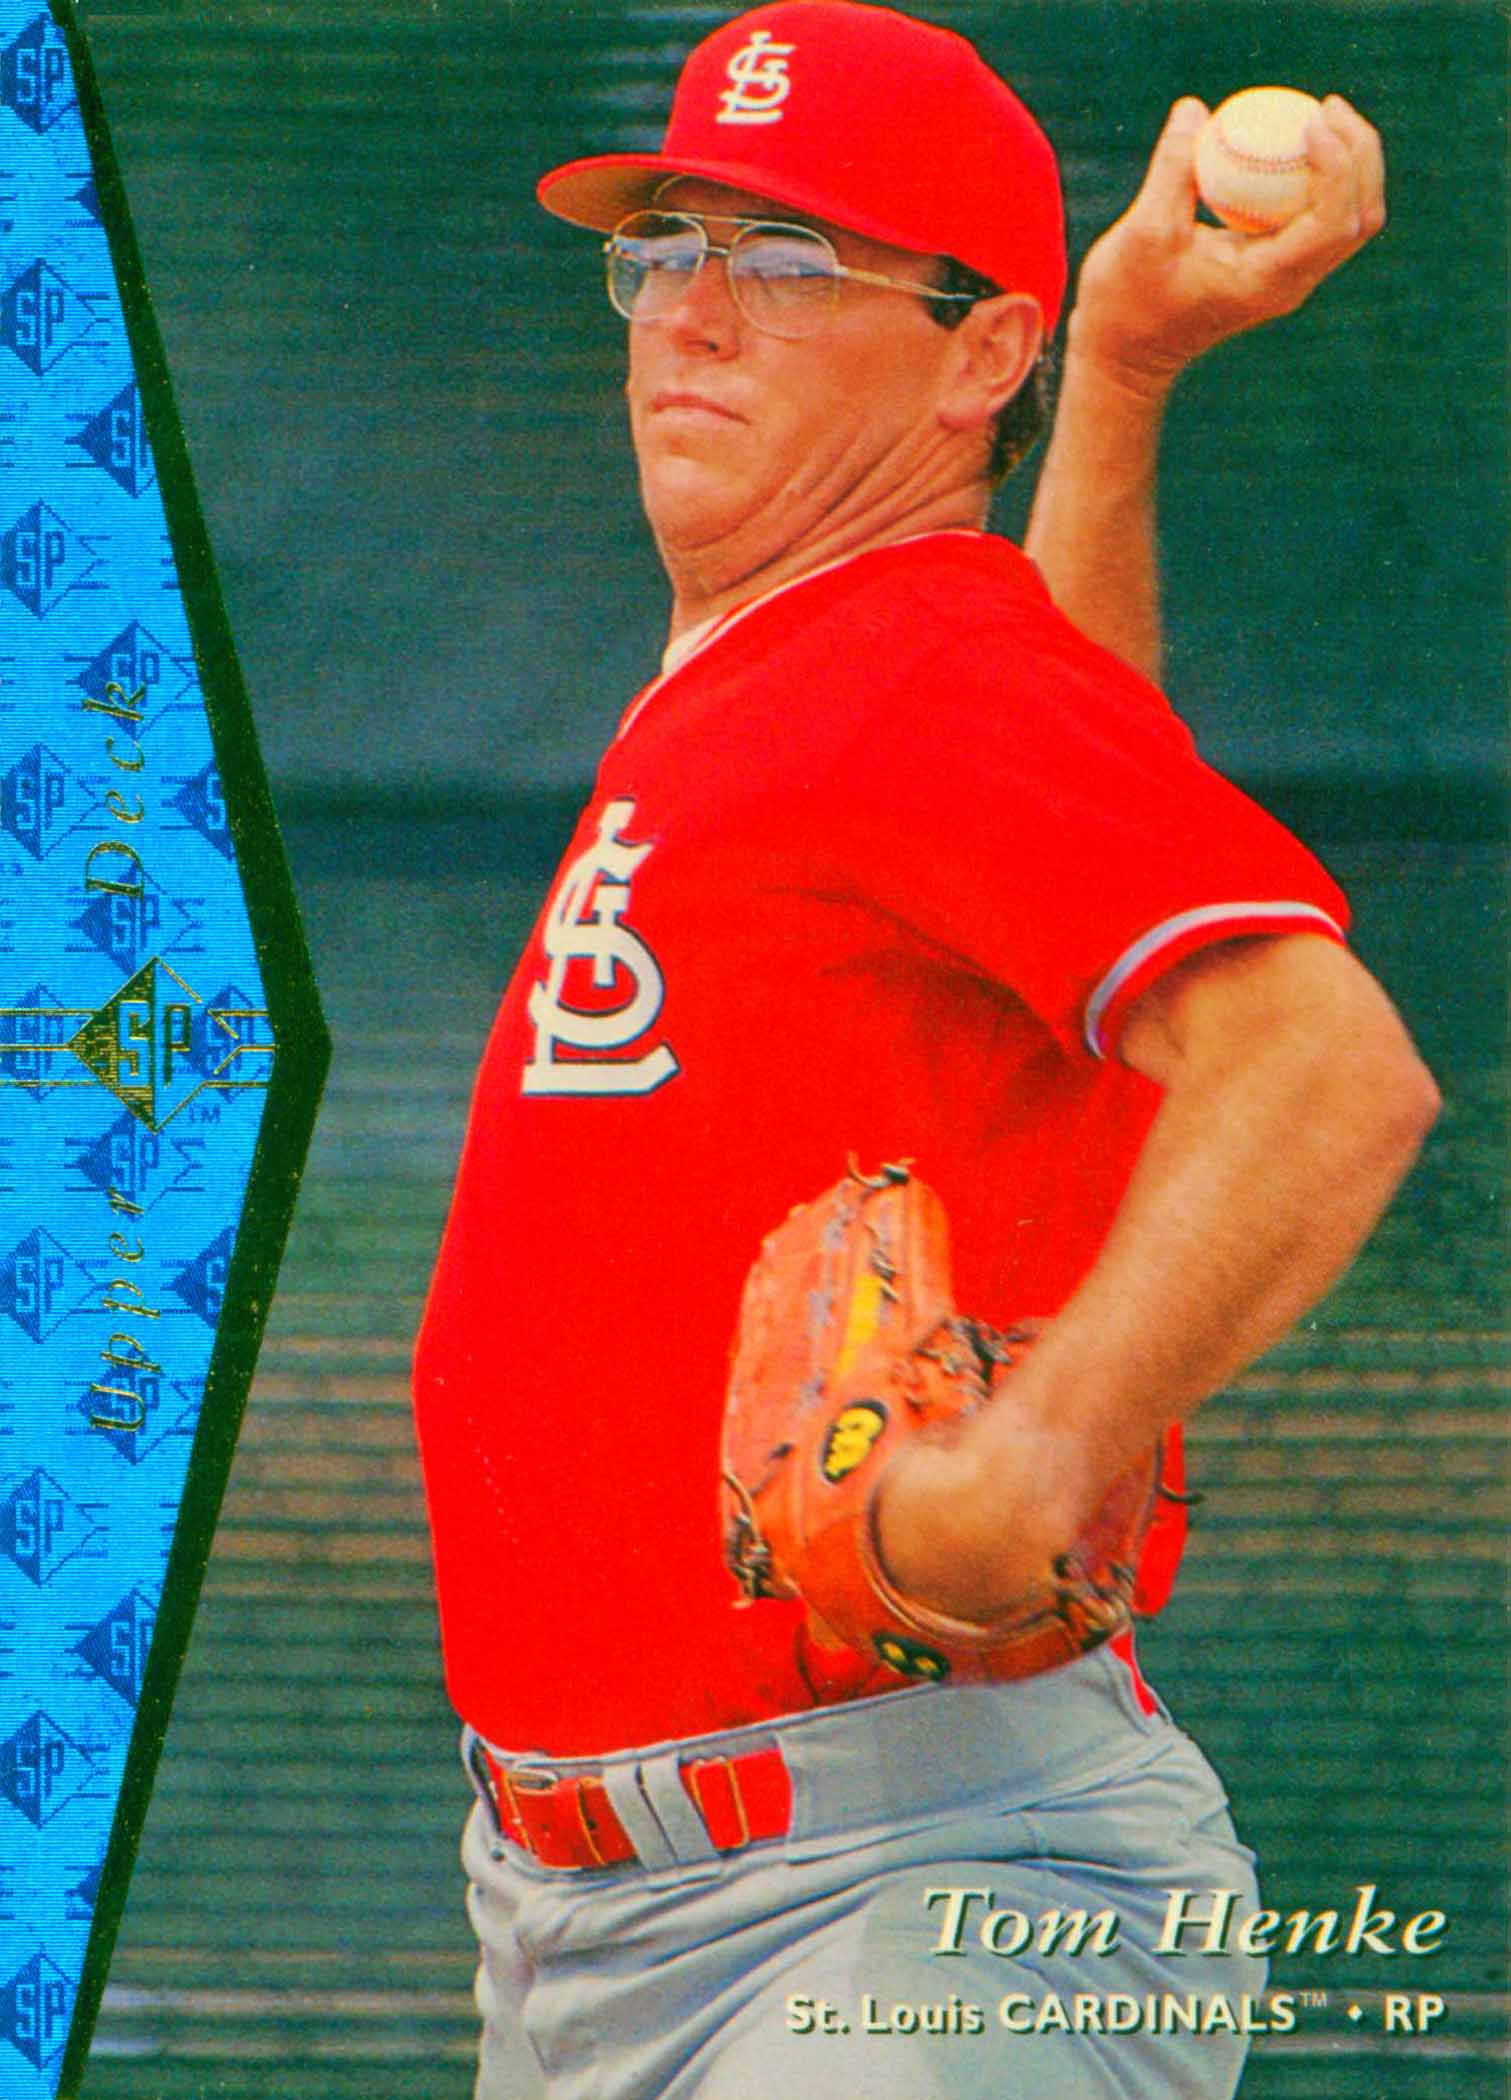 1996 Topps #90 Tom Henke - St. Louis Cardinals